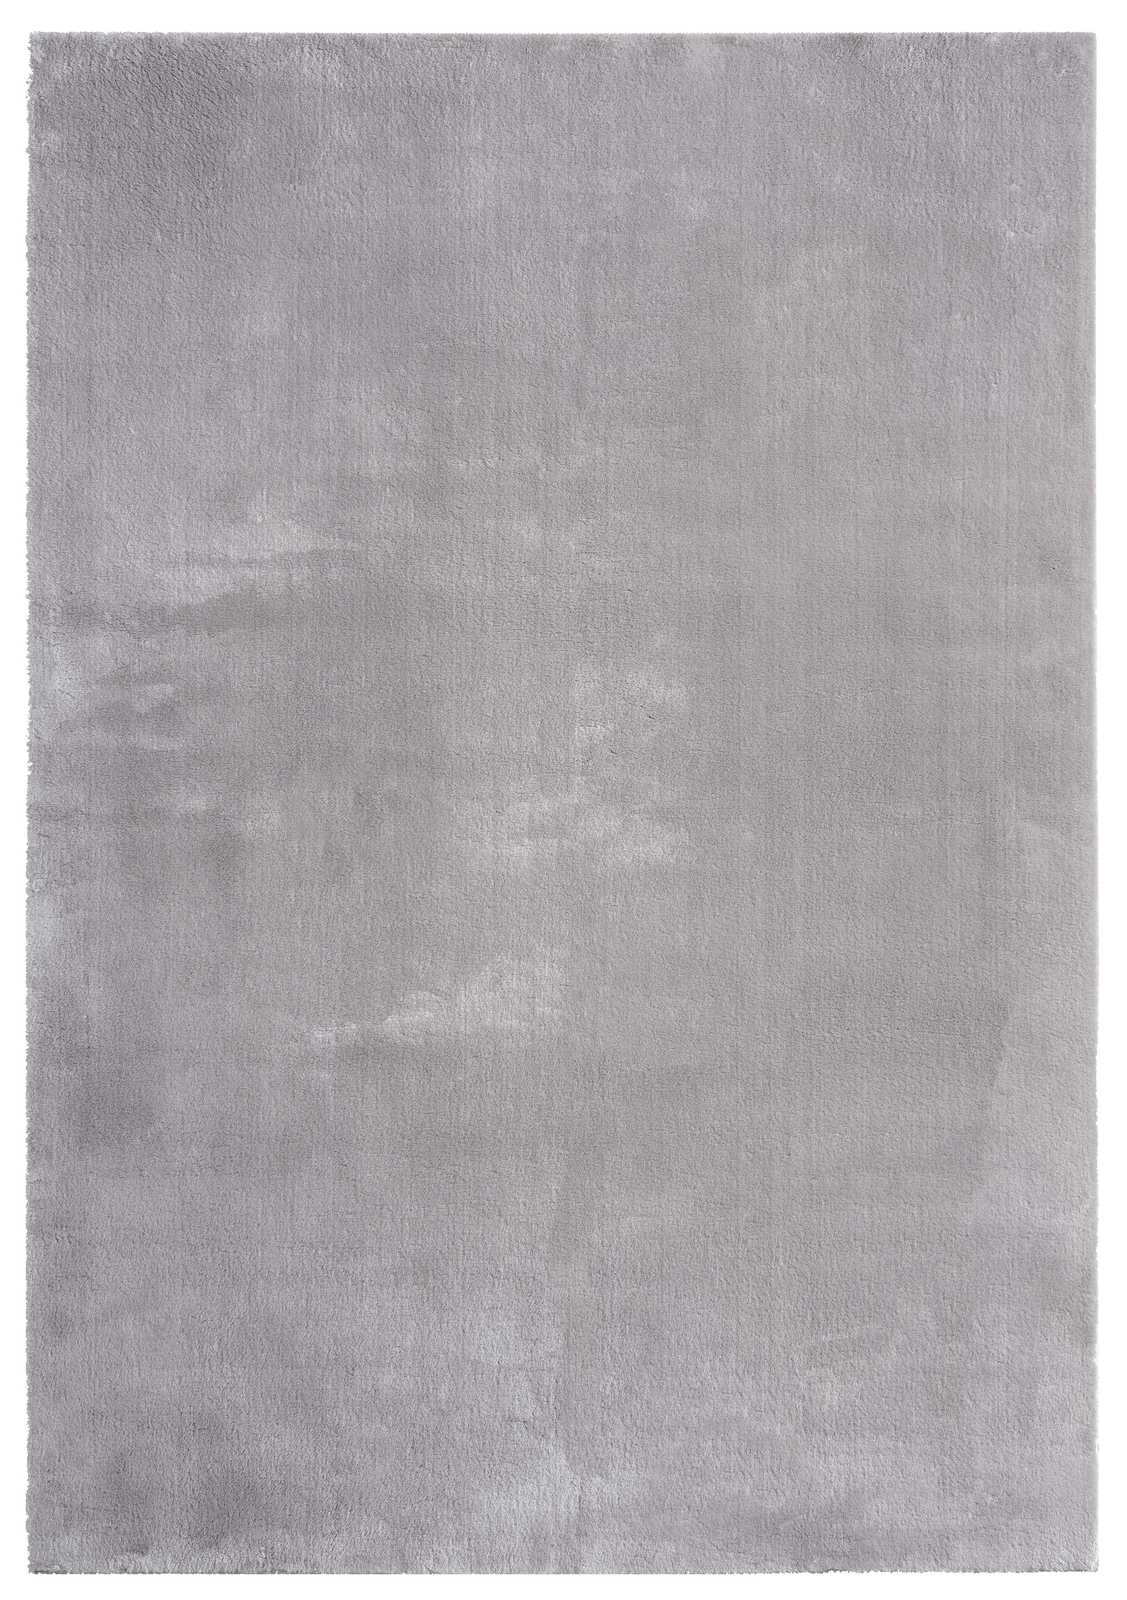             Fine high pile carpet in grey - 150 x 80 cm
        